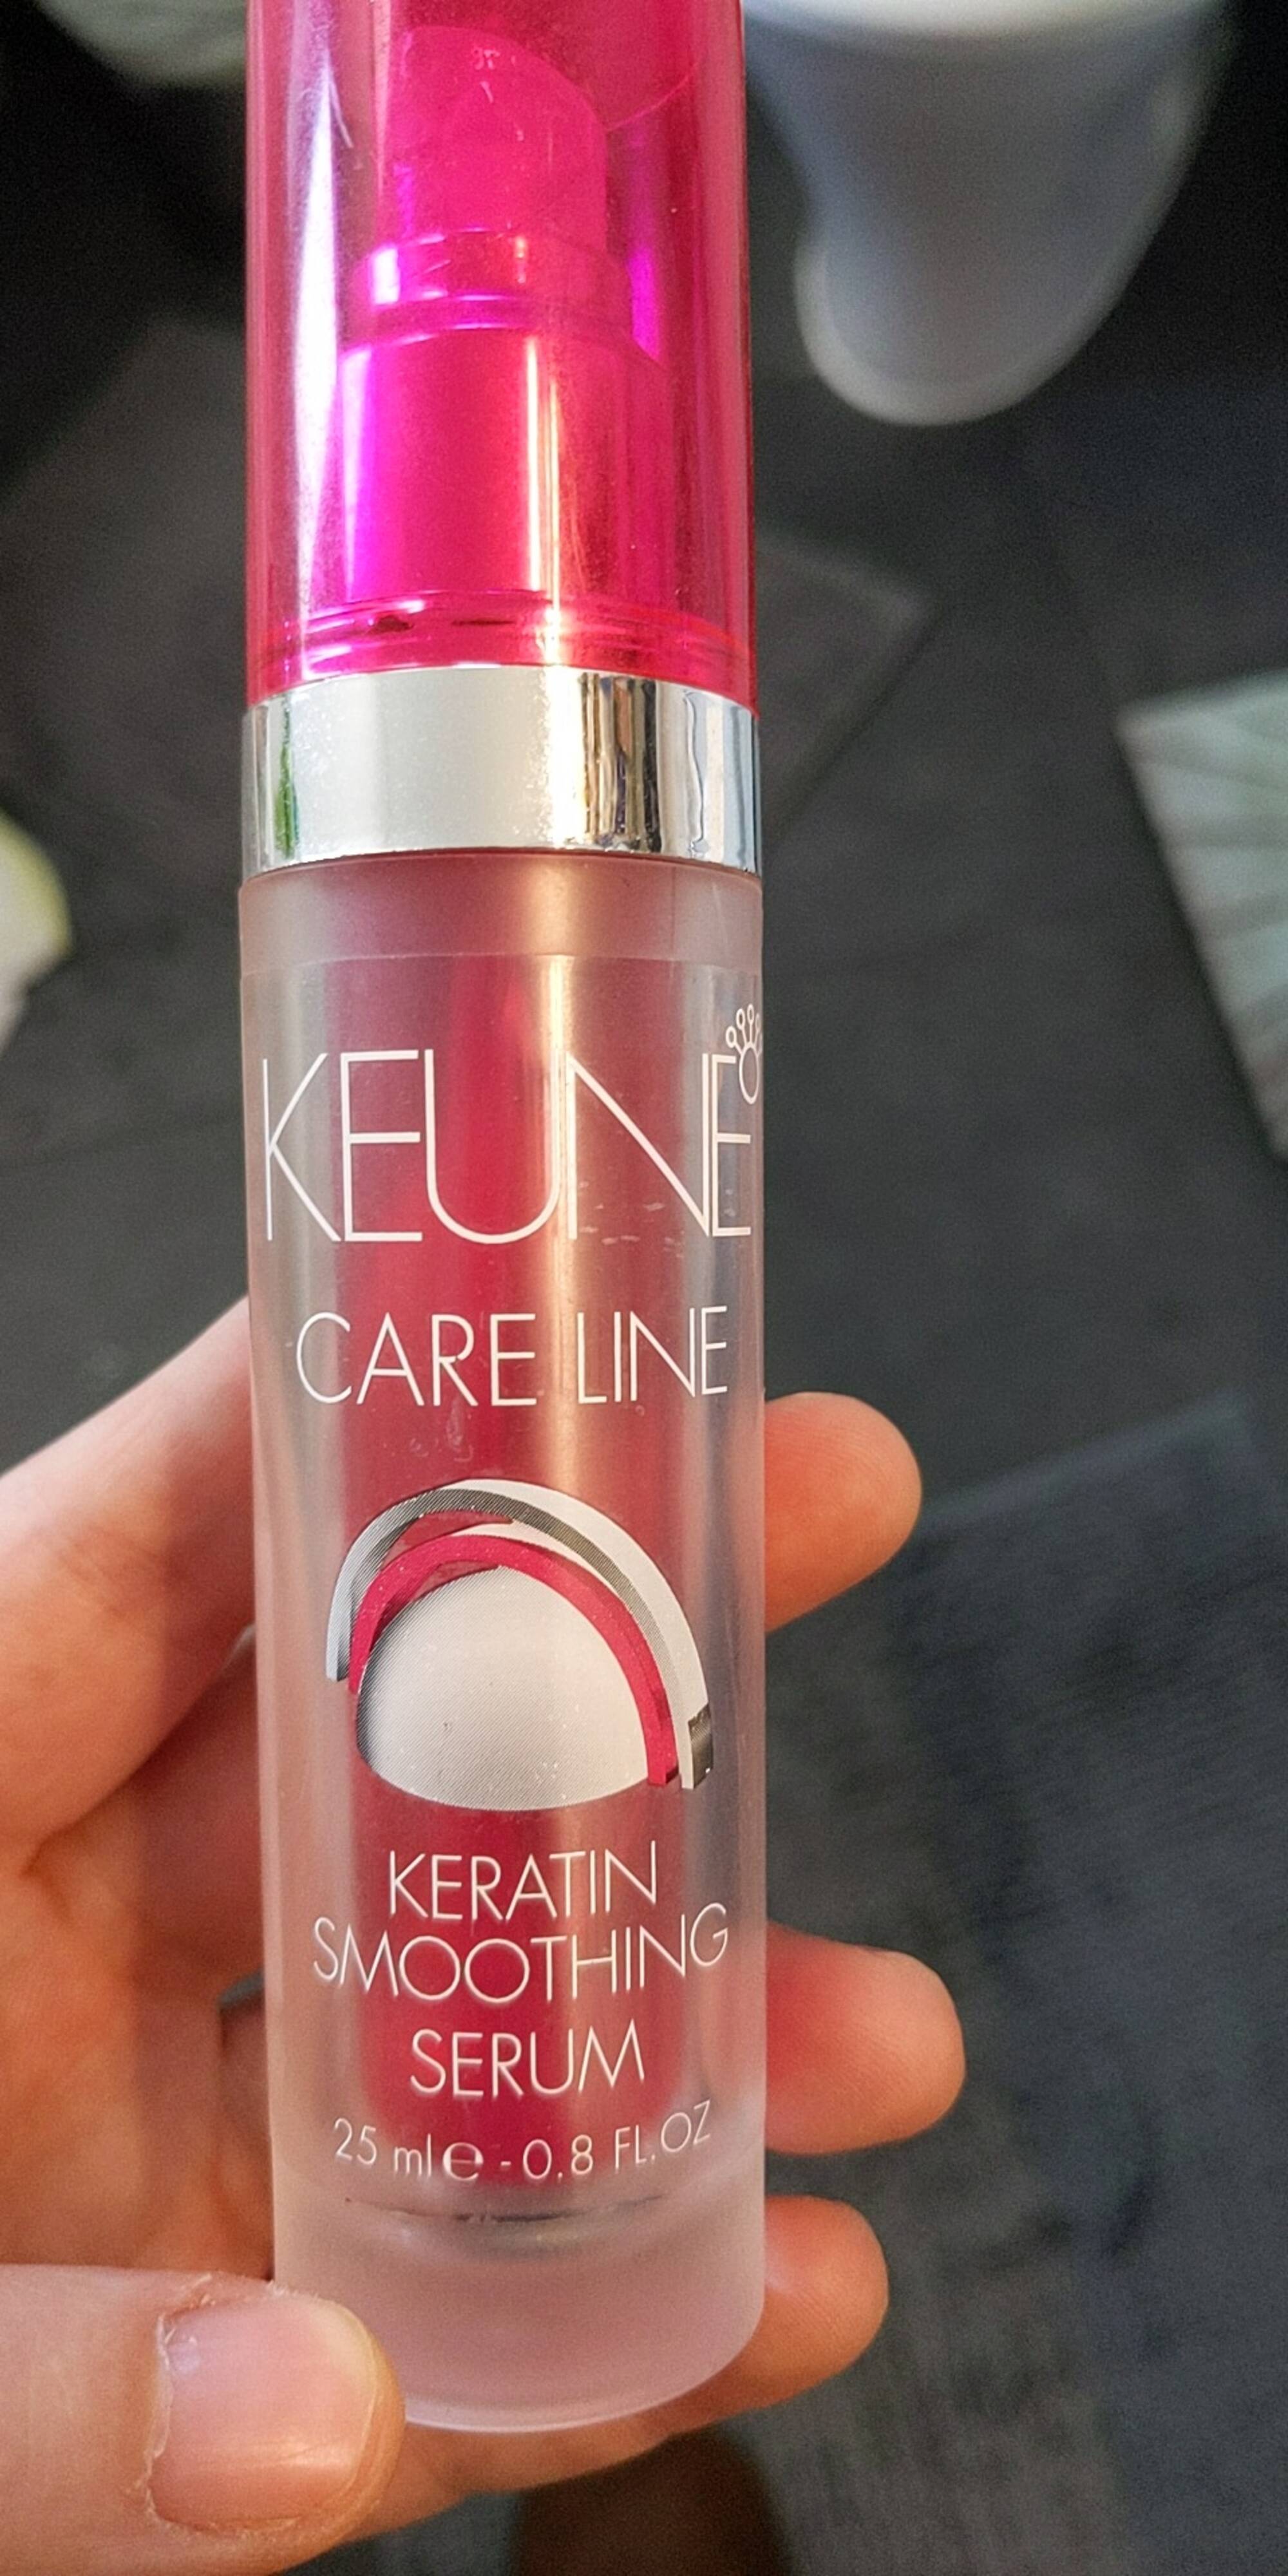 KEUNE - Care line - Keratin smoothing serum